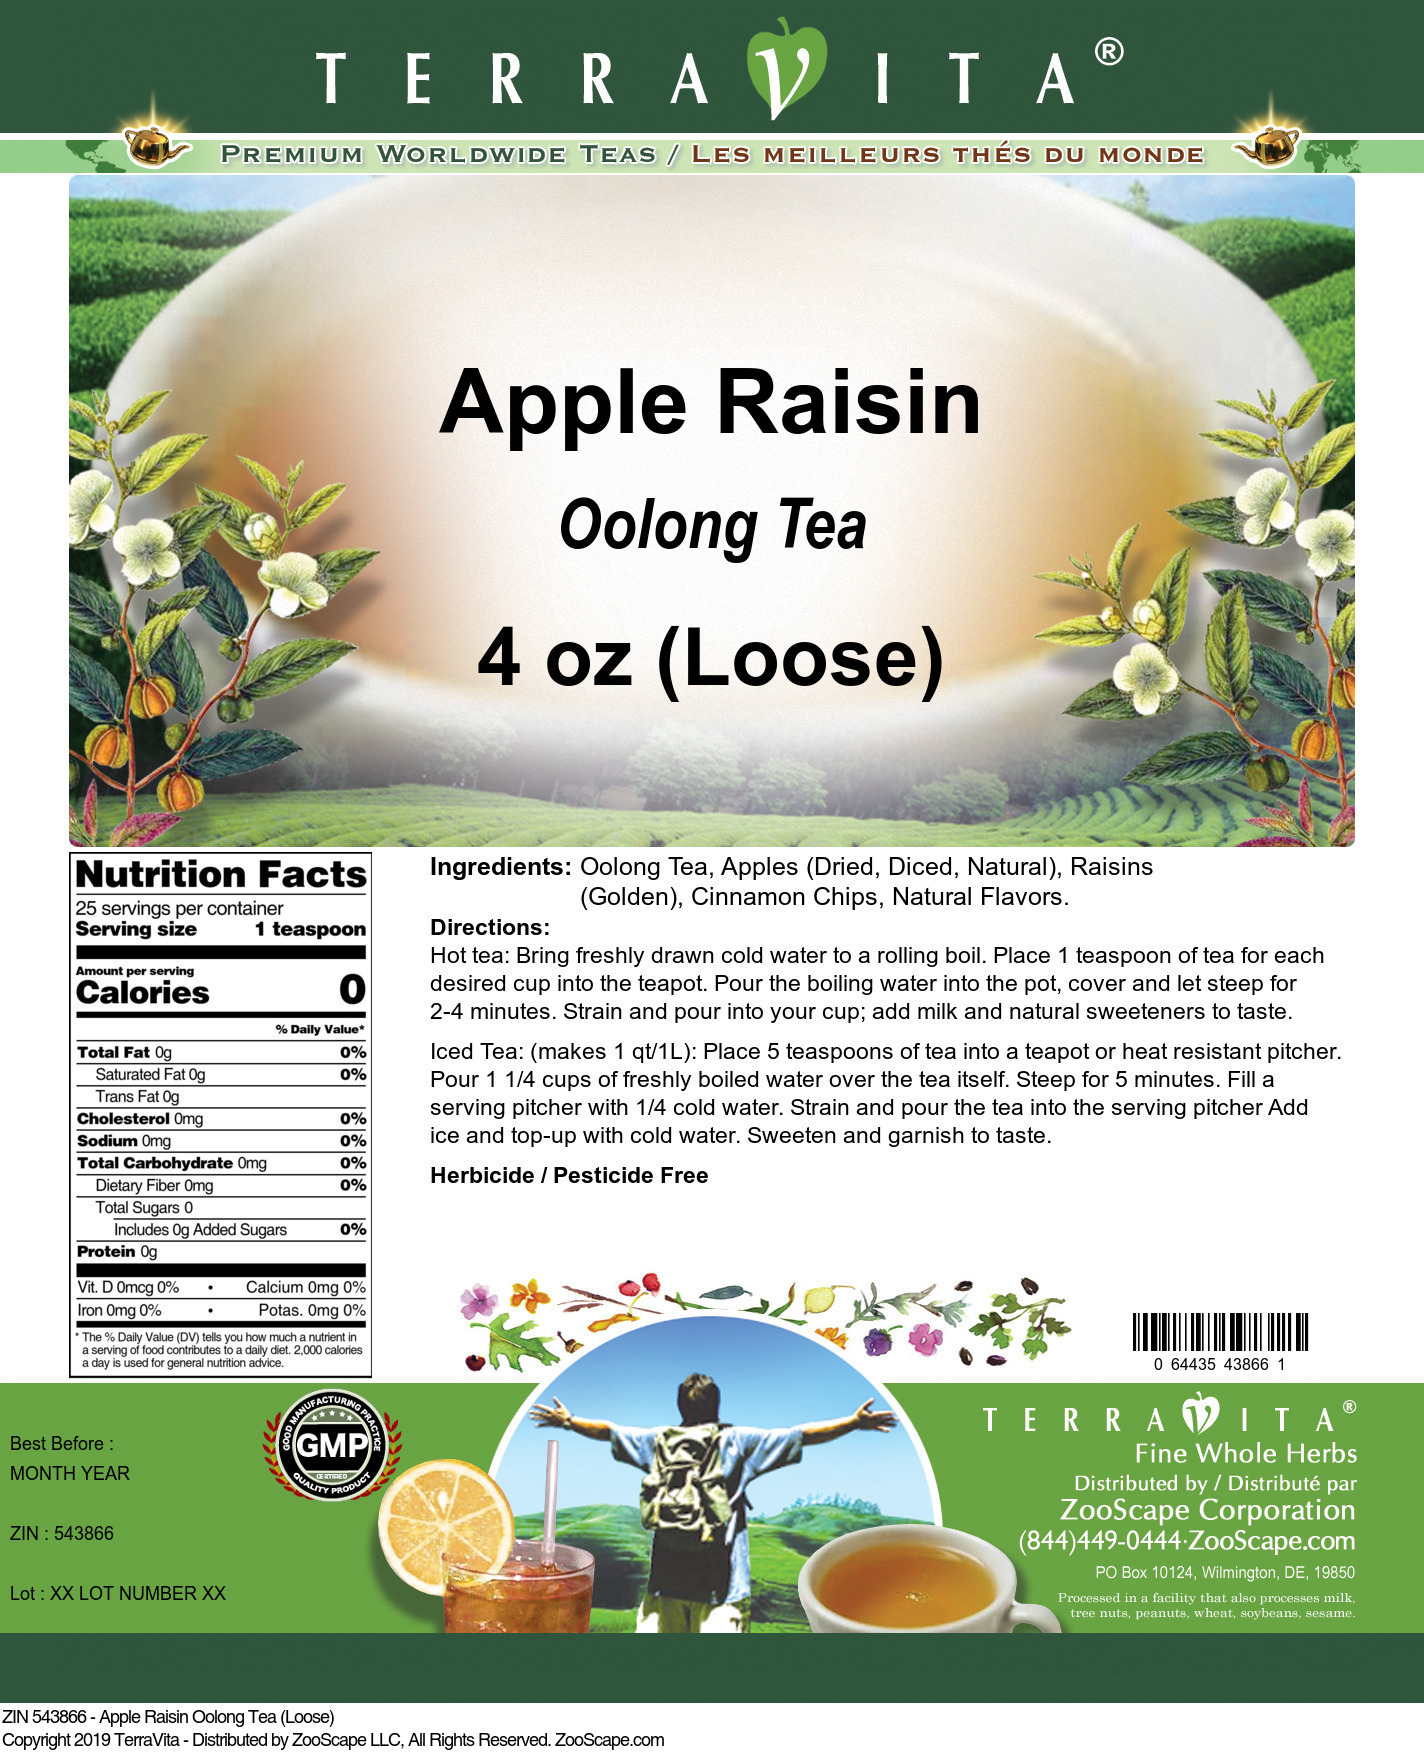 Apple Raisin Oolong Tea (Loose) - Label